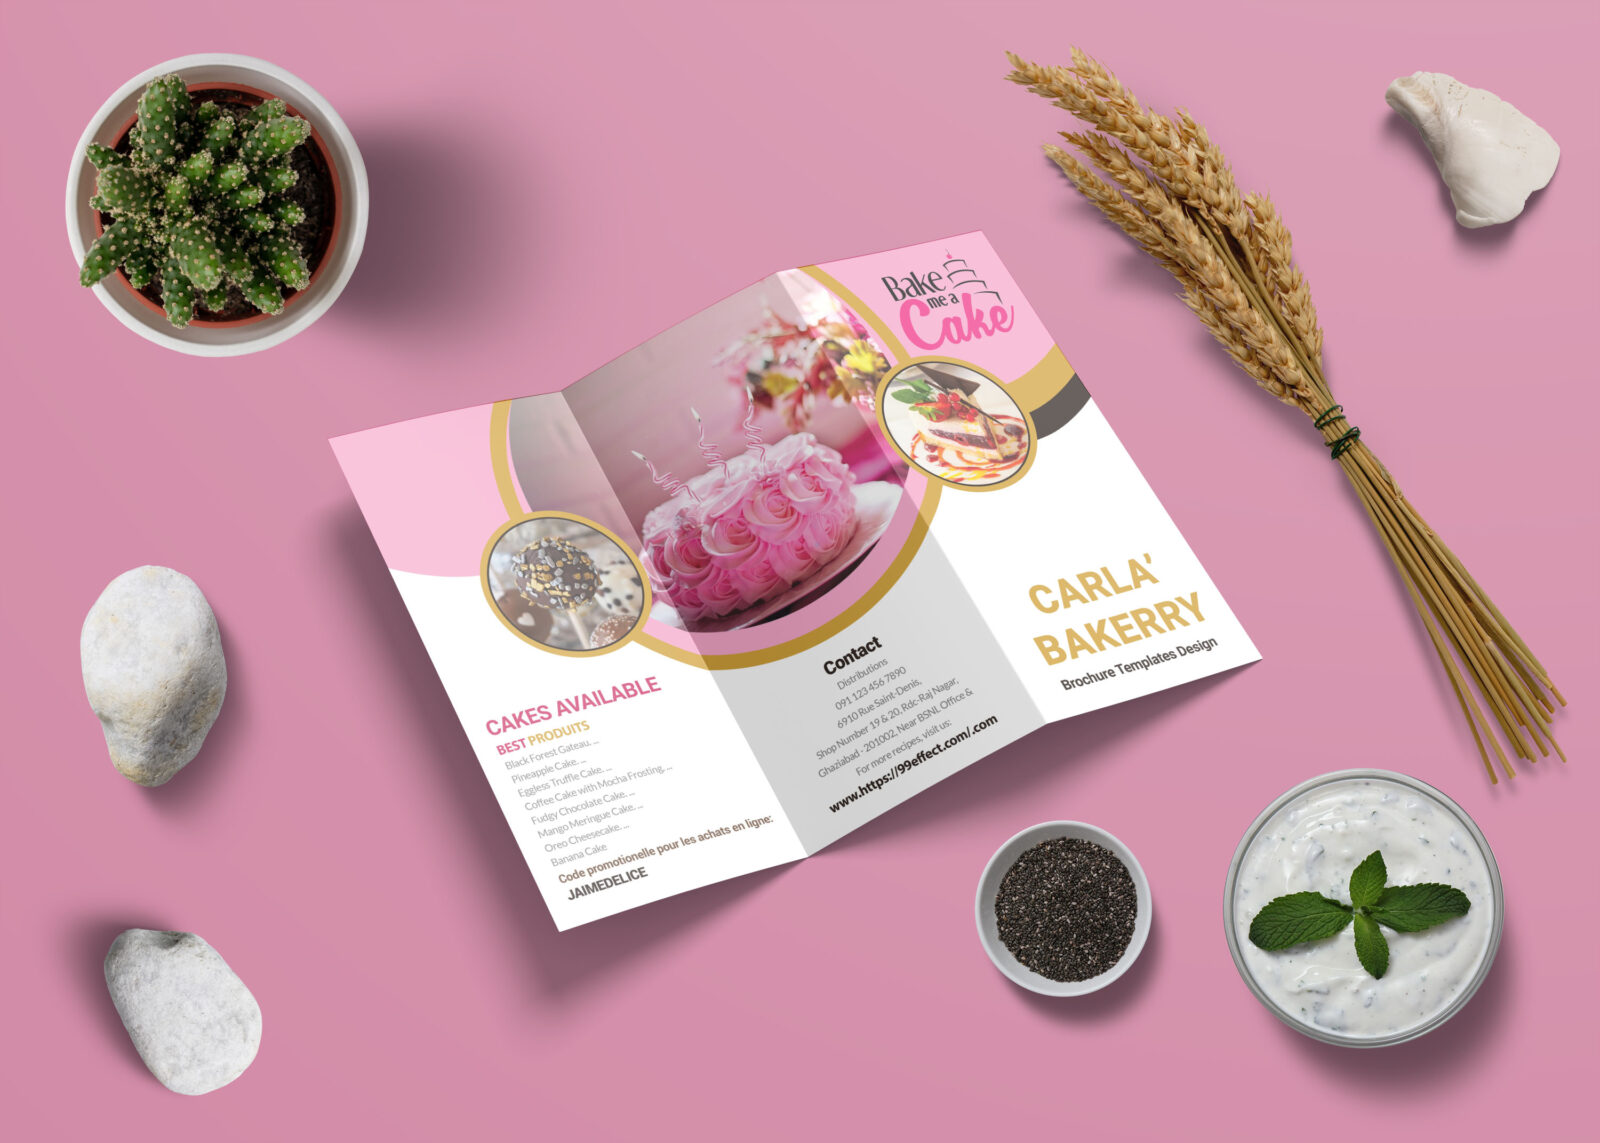 Premium Bakery Trifold Brochure Template